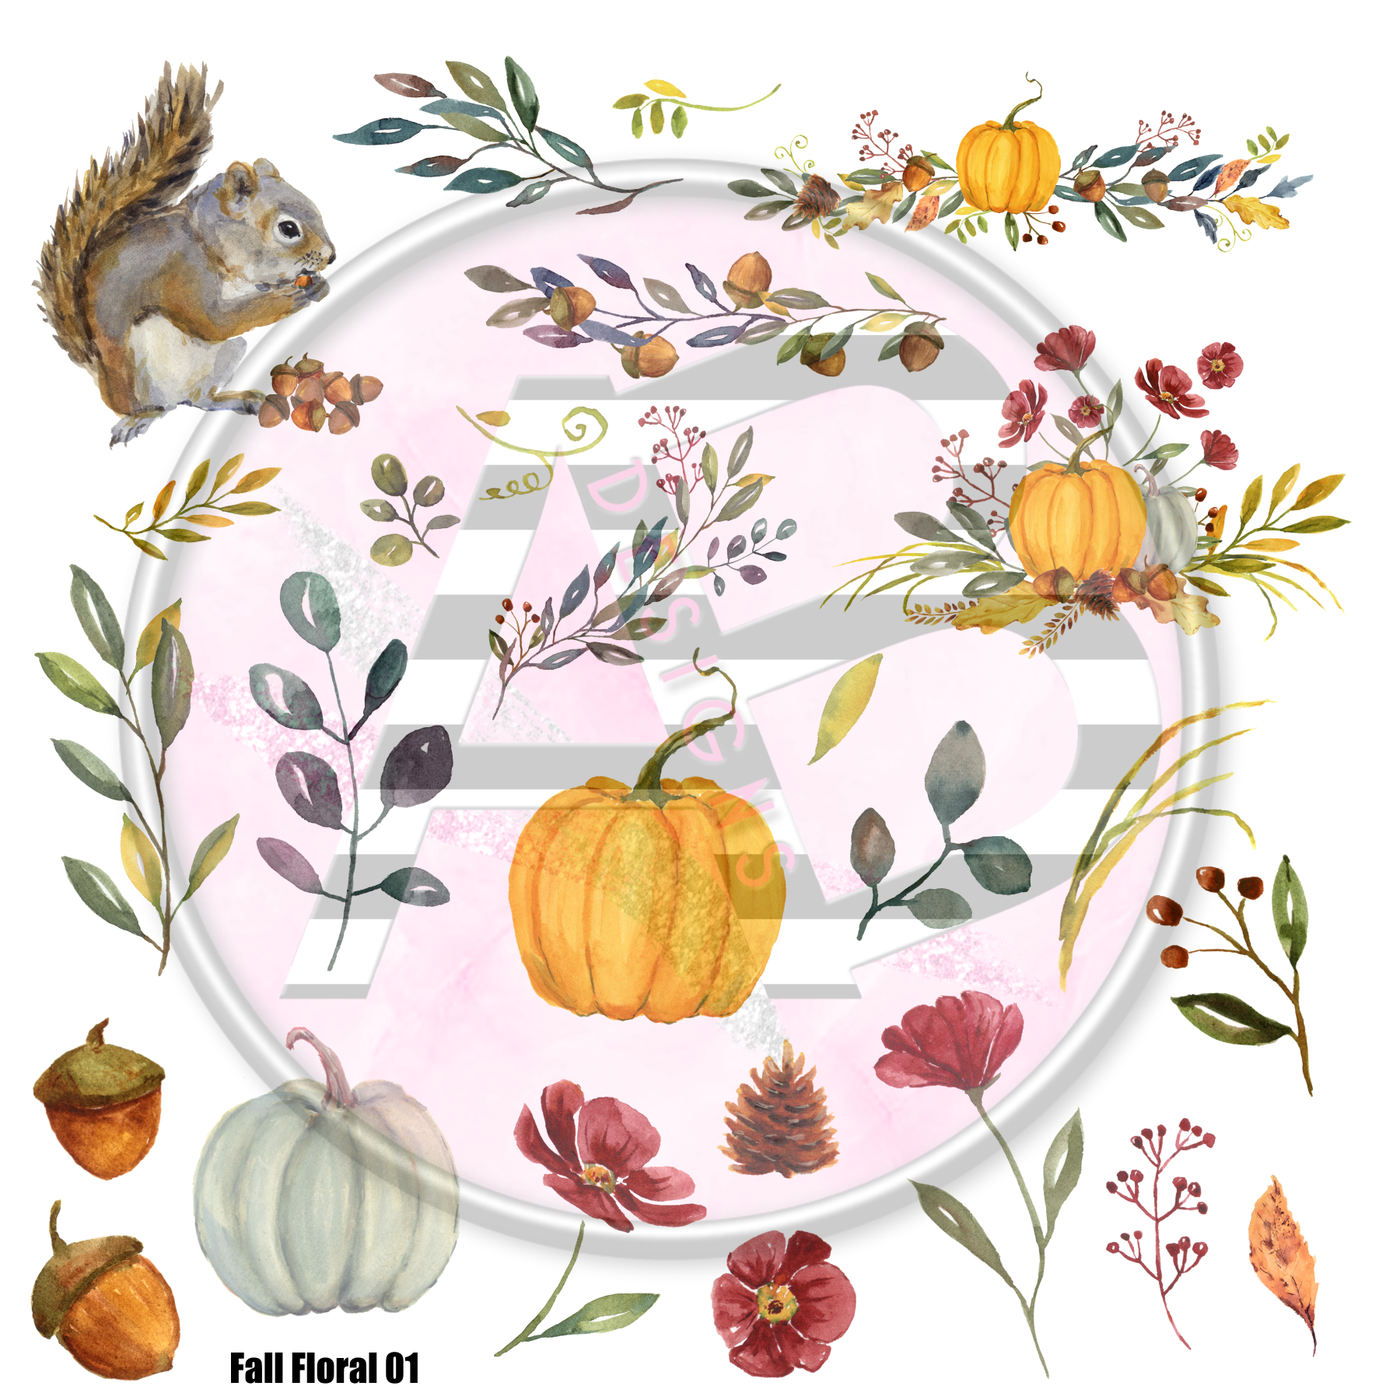 Fall Floral 01 Full Sheet 12x12 - Clear Sheet